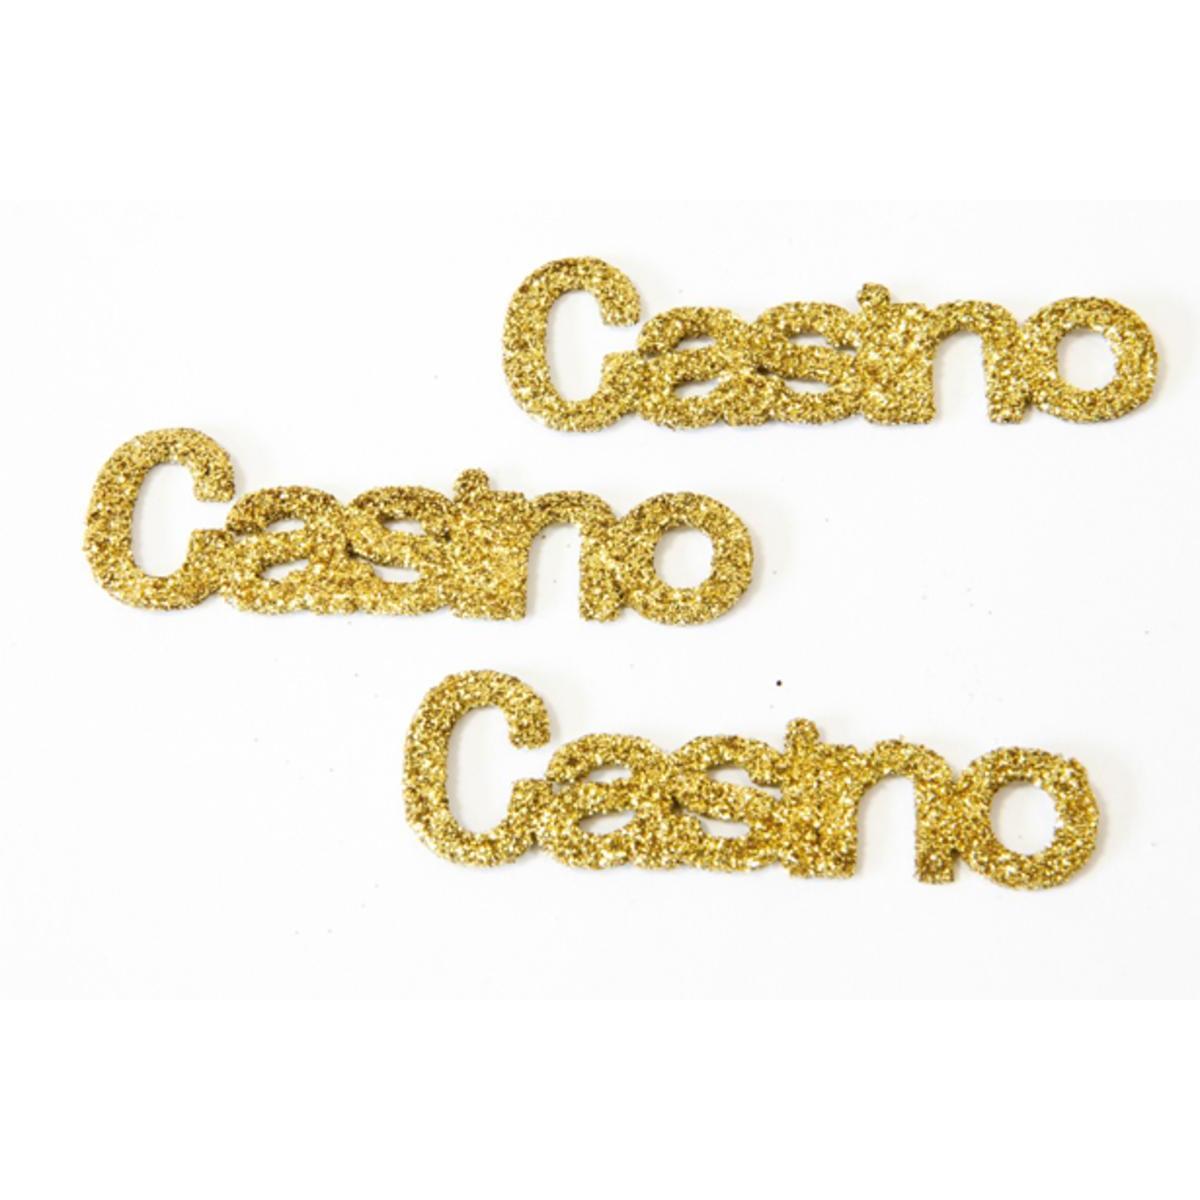 Confetti décoration de table casino (x 6) - 5 x 1.5 cm - Or